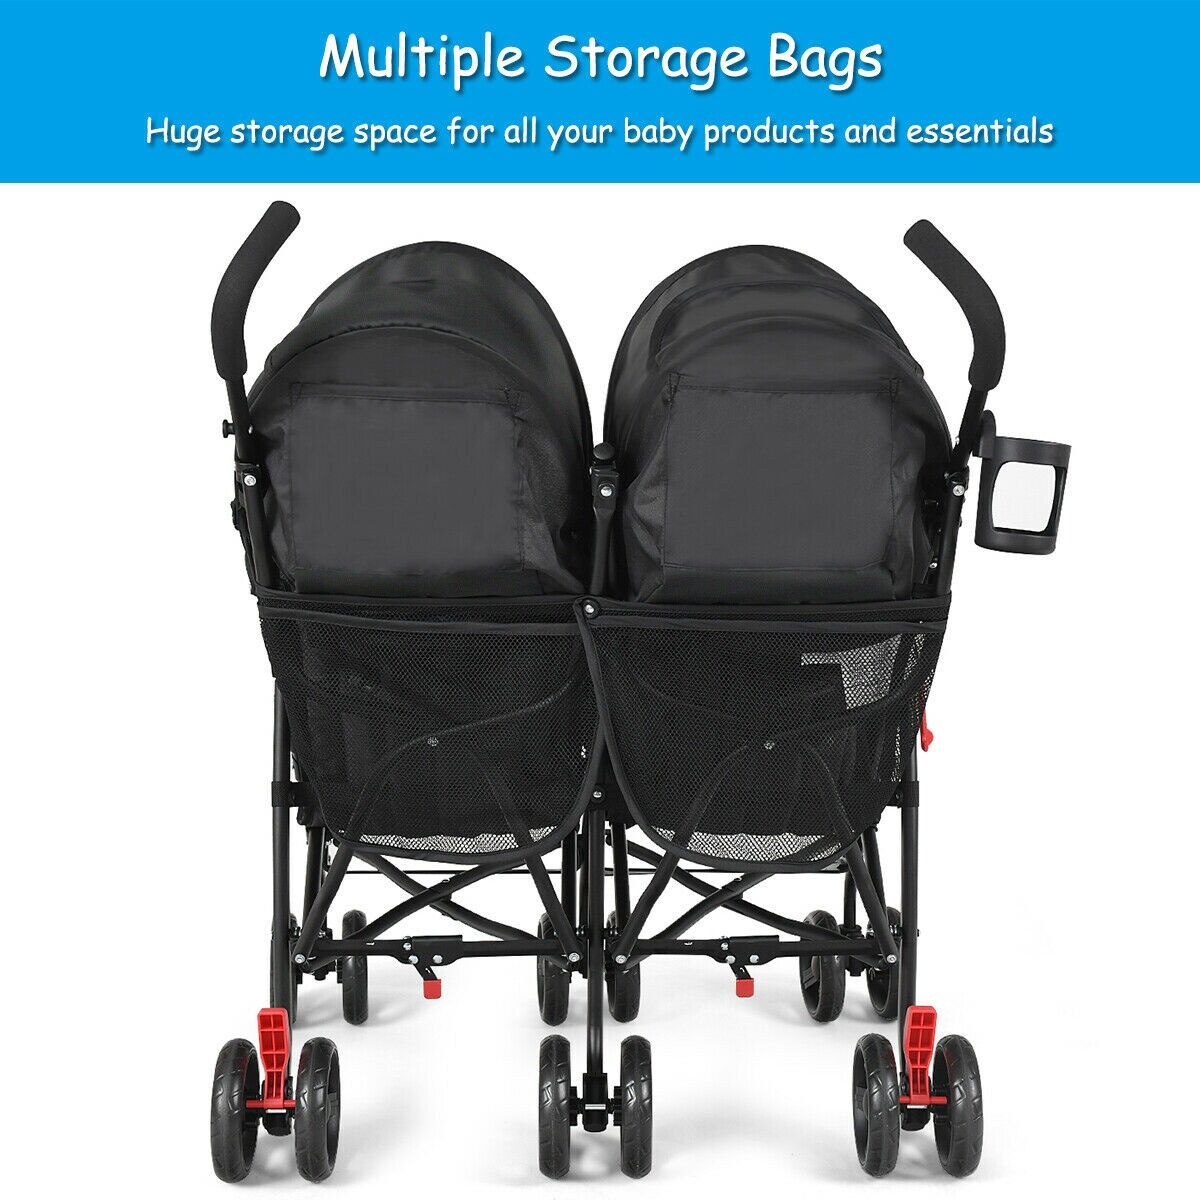 baby joy lightweight stroller